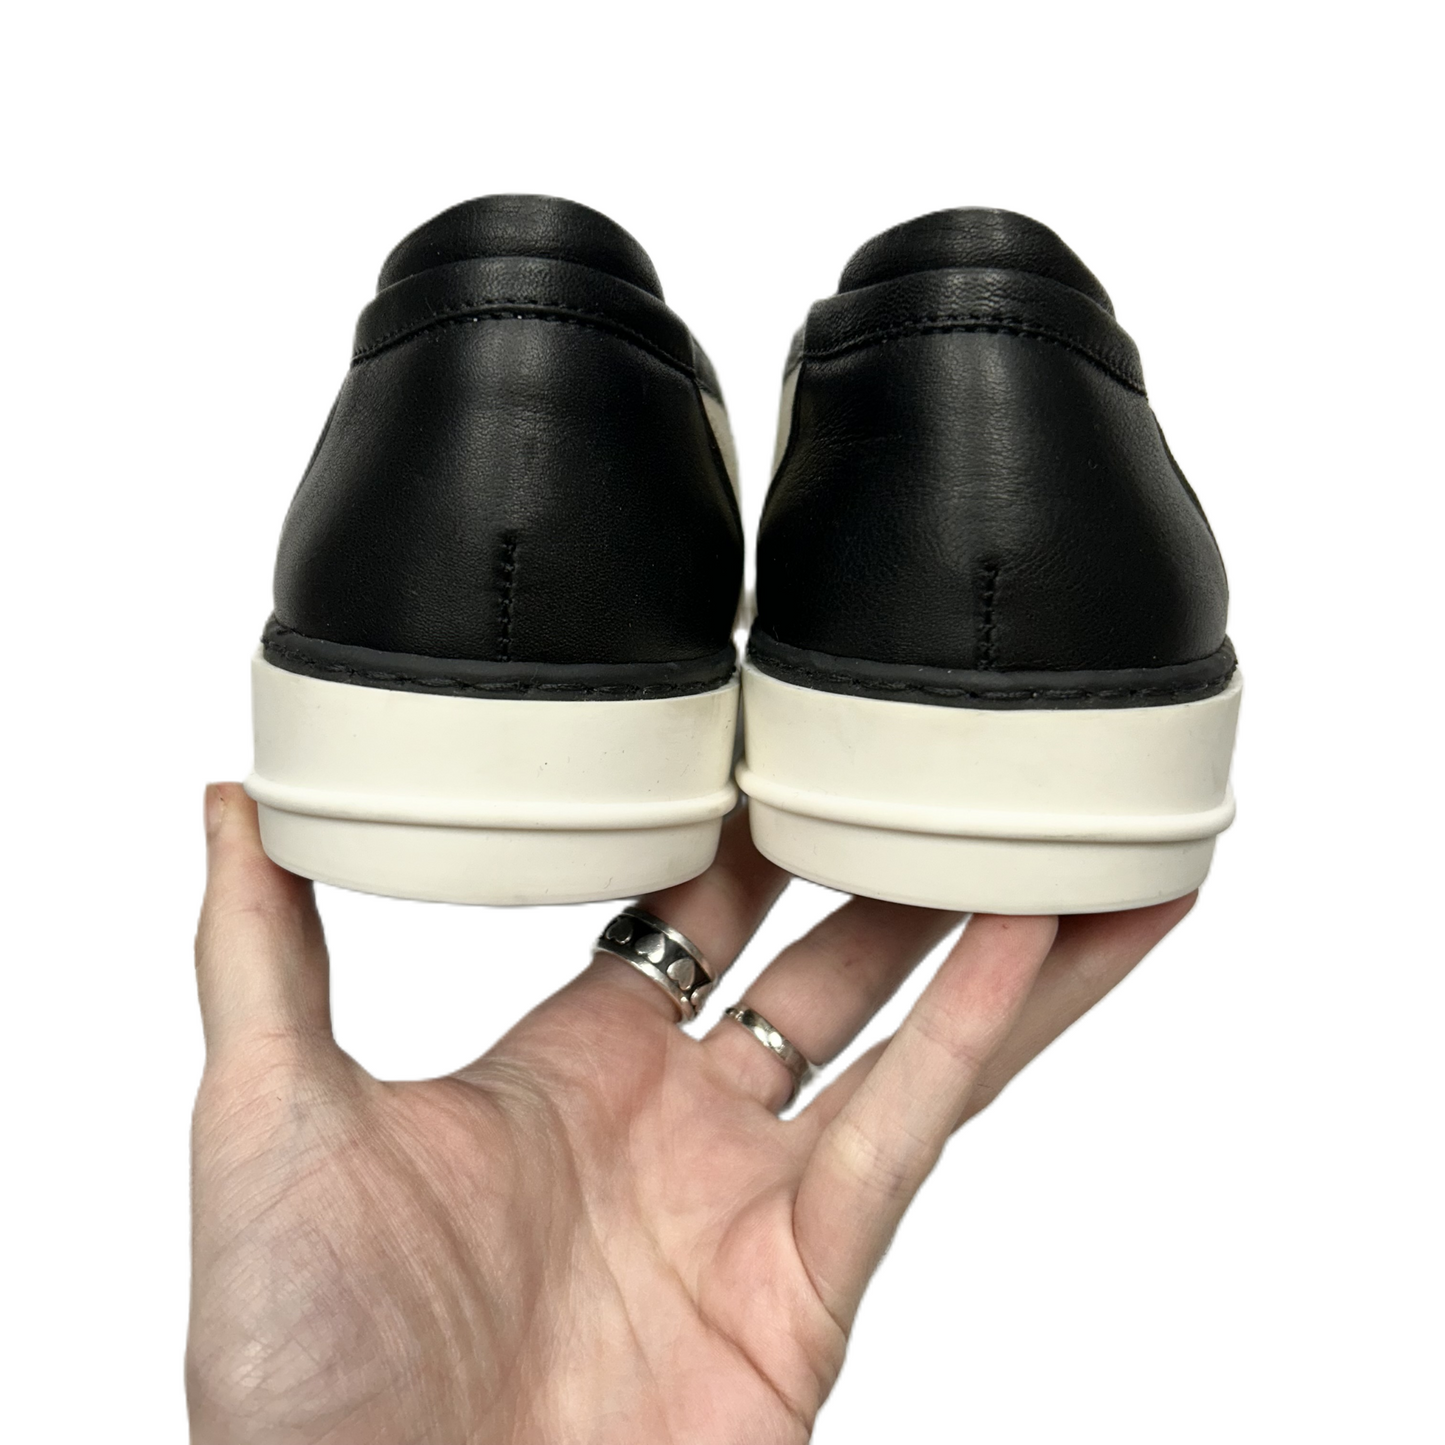 Tan Shoes Designer By M. Gemi, Size: 8.5